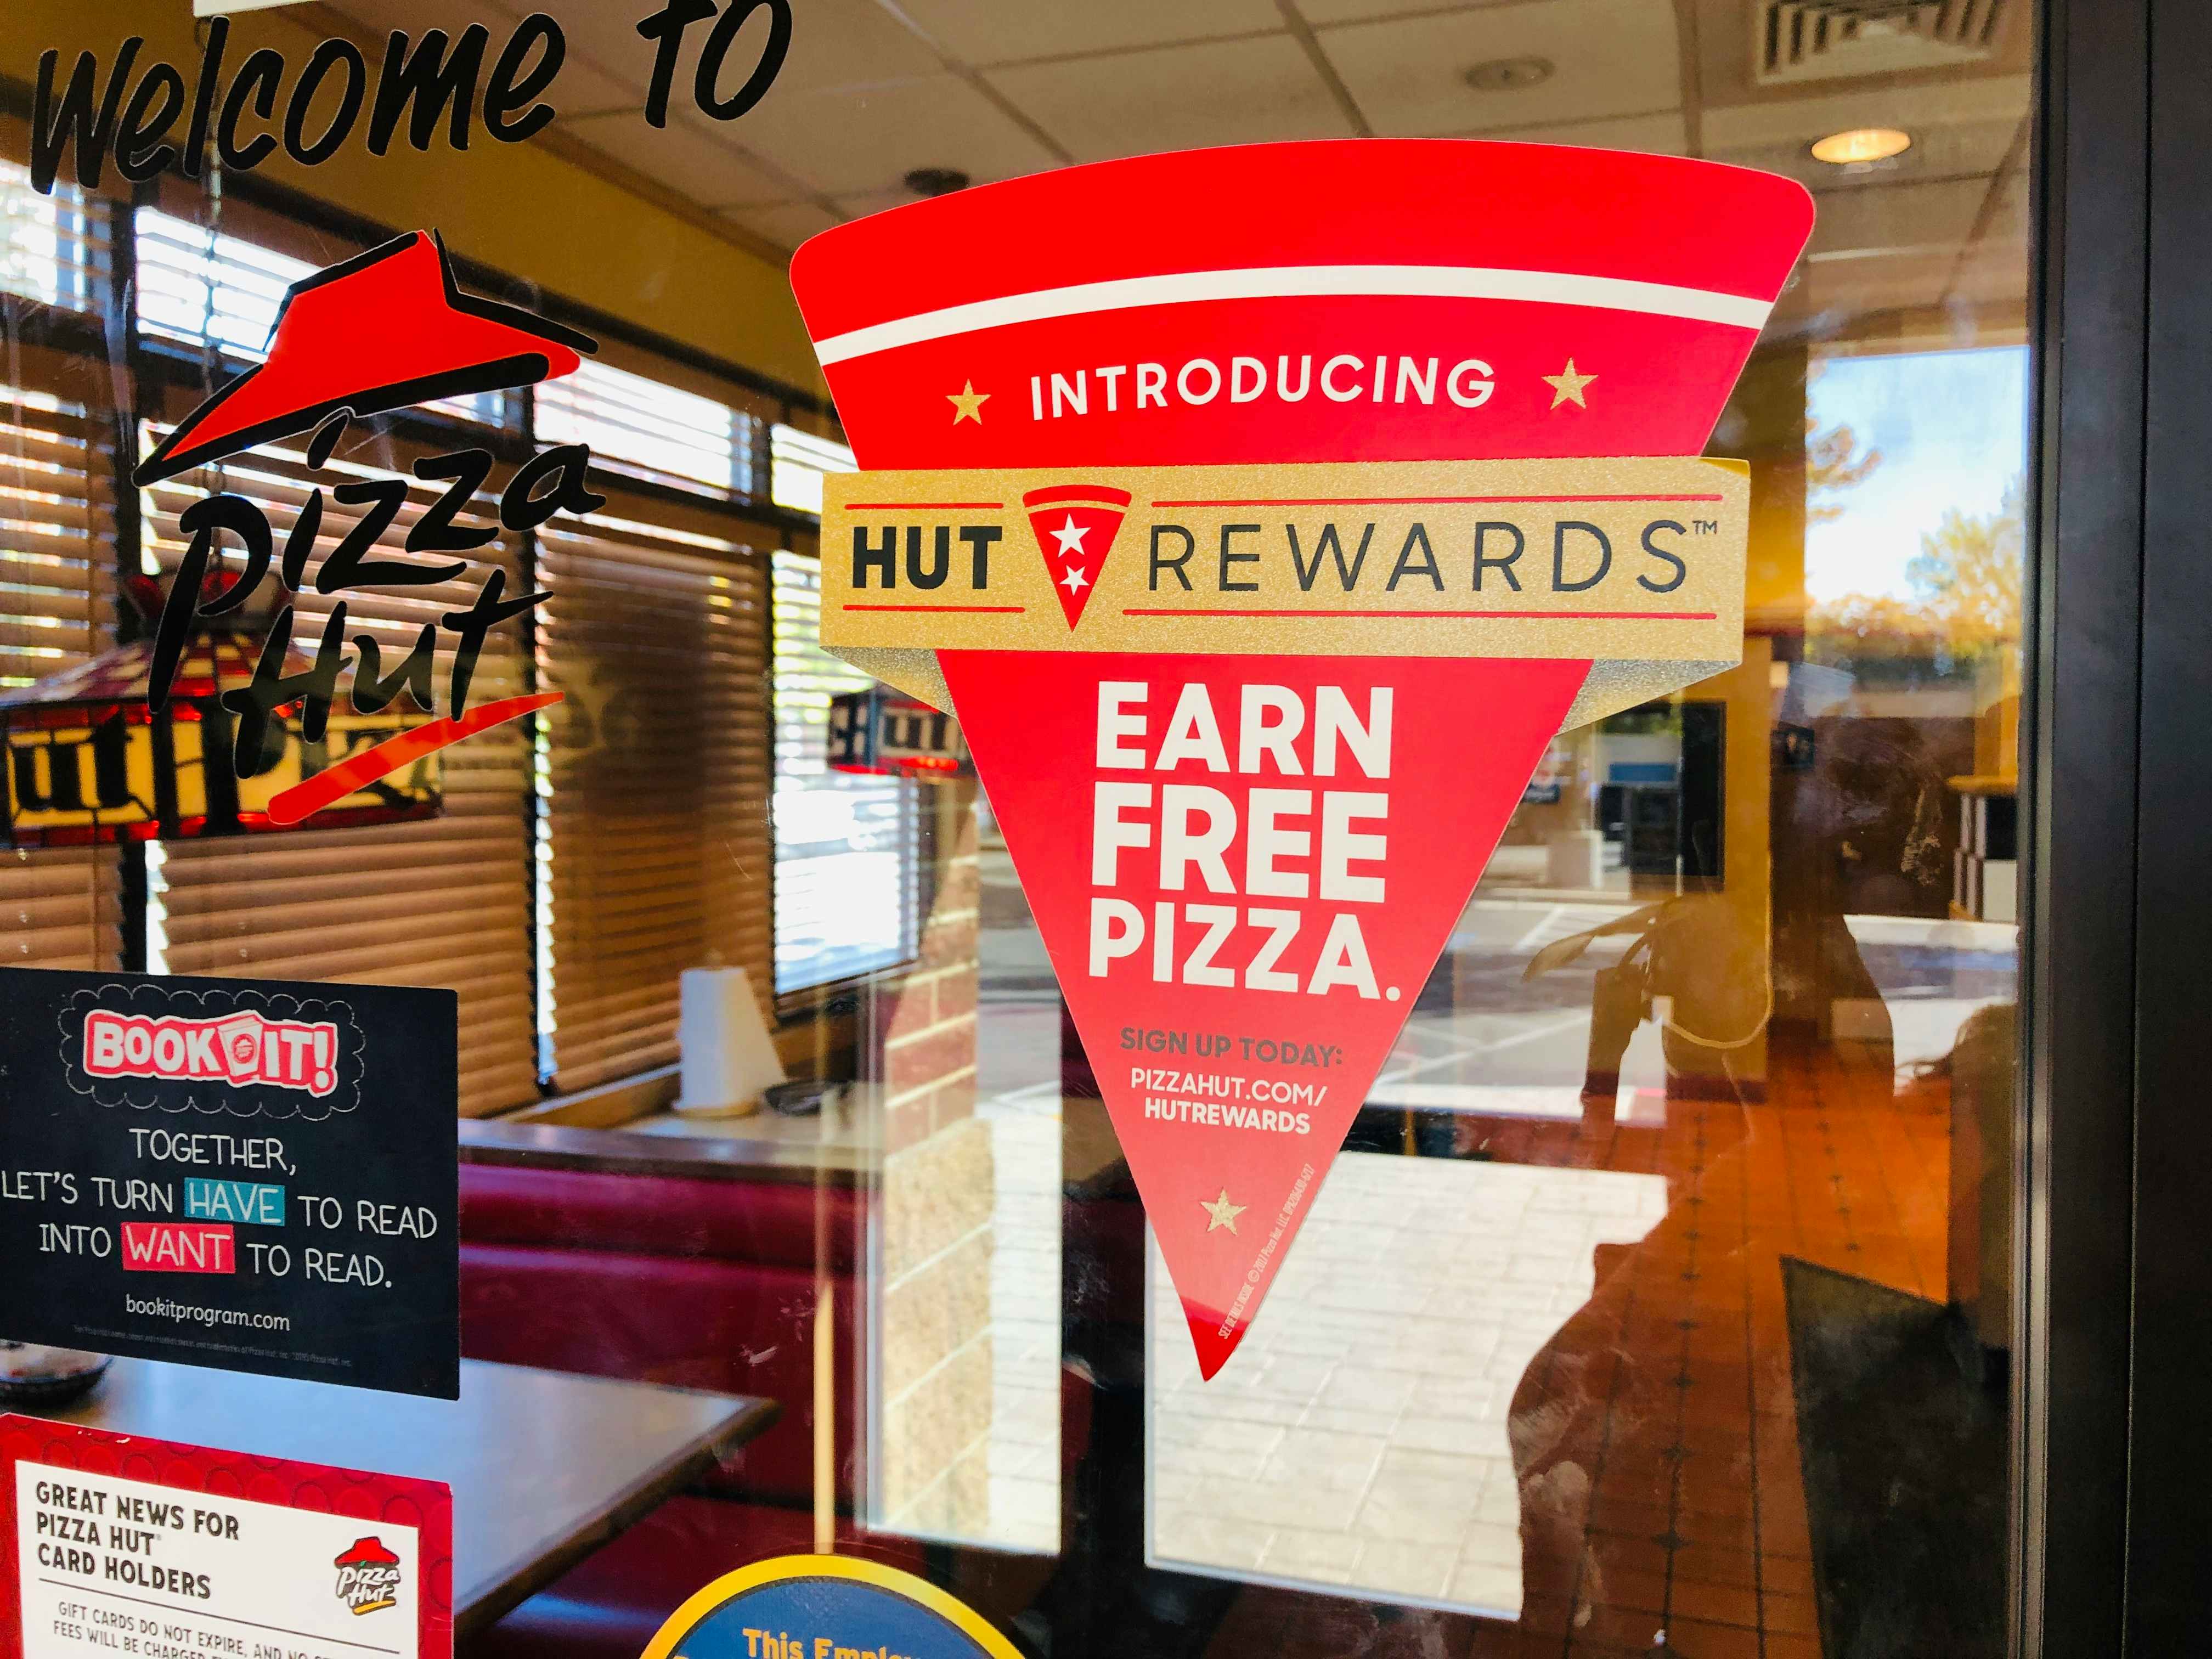 A sign for Pizza Hut's Hut Rewards 